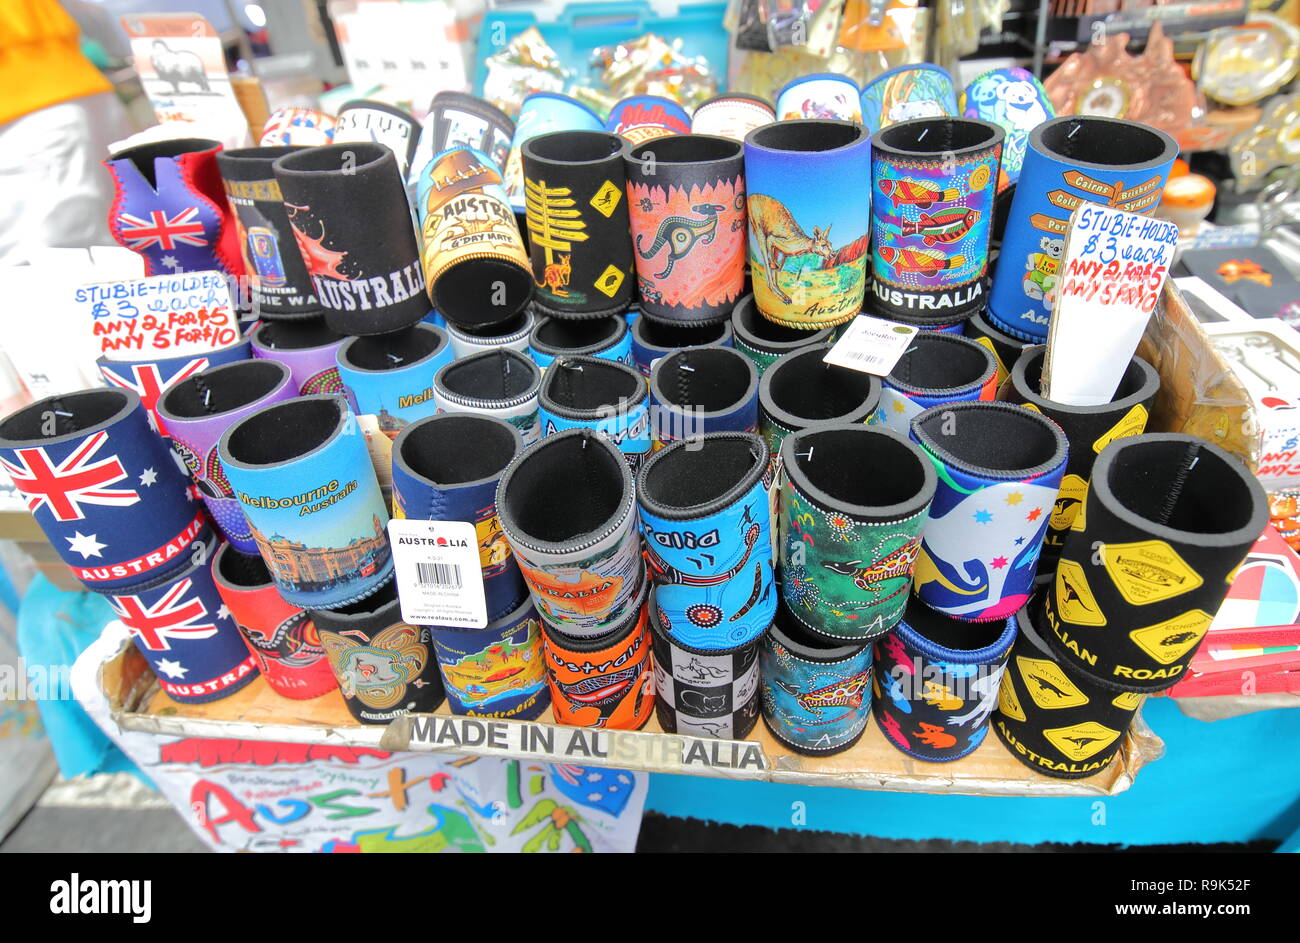 Beer Stubby Holder Anzeige an Queen Victoria Market in Melbourne, Australien Stockfoto